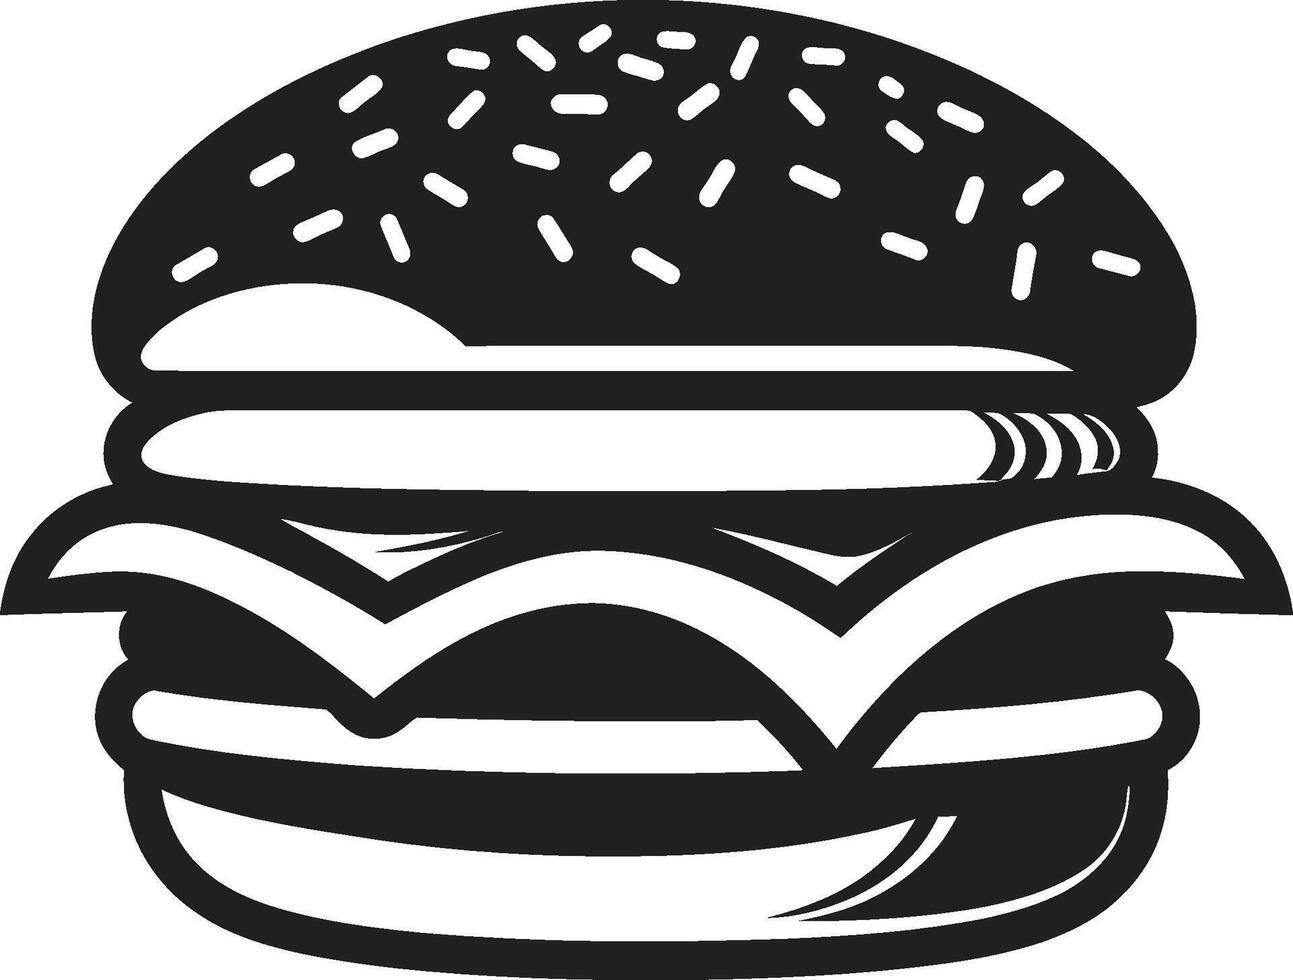 Iconic Burger Design Black Sizzling Temptation Burger Emblem vector